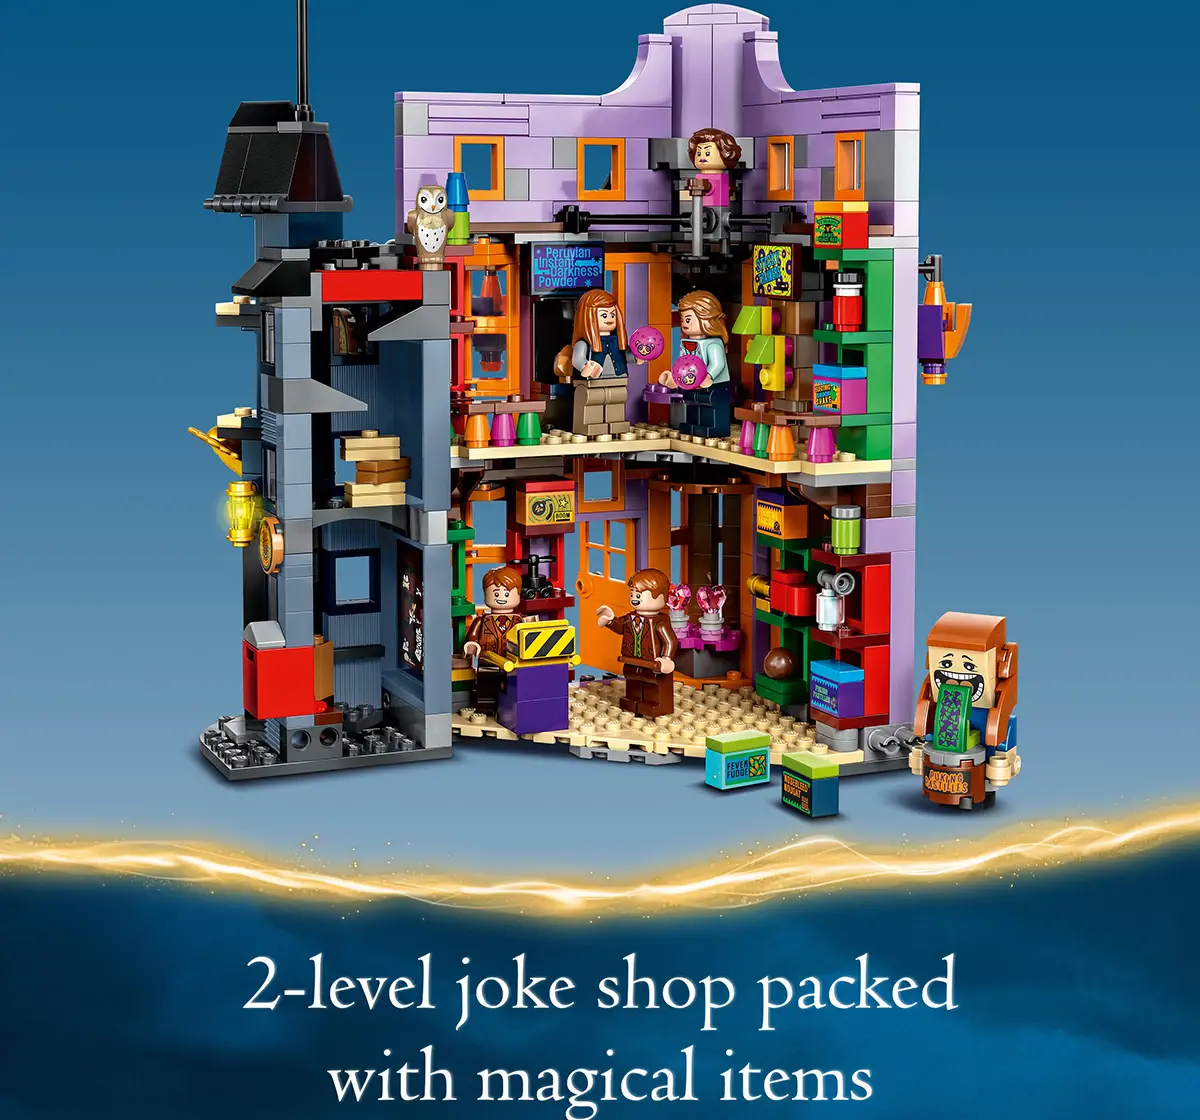 Lego Harry Potter Diagon Alley: Weasleys Wizard Wheezes 76422 (834 Pieces), 8Y+